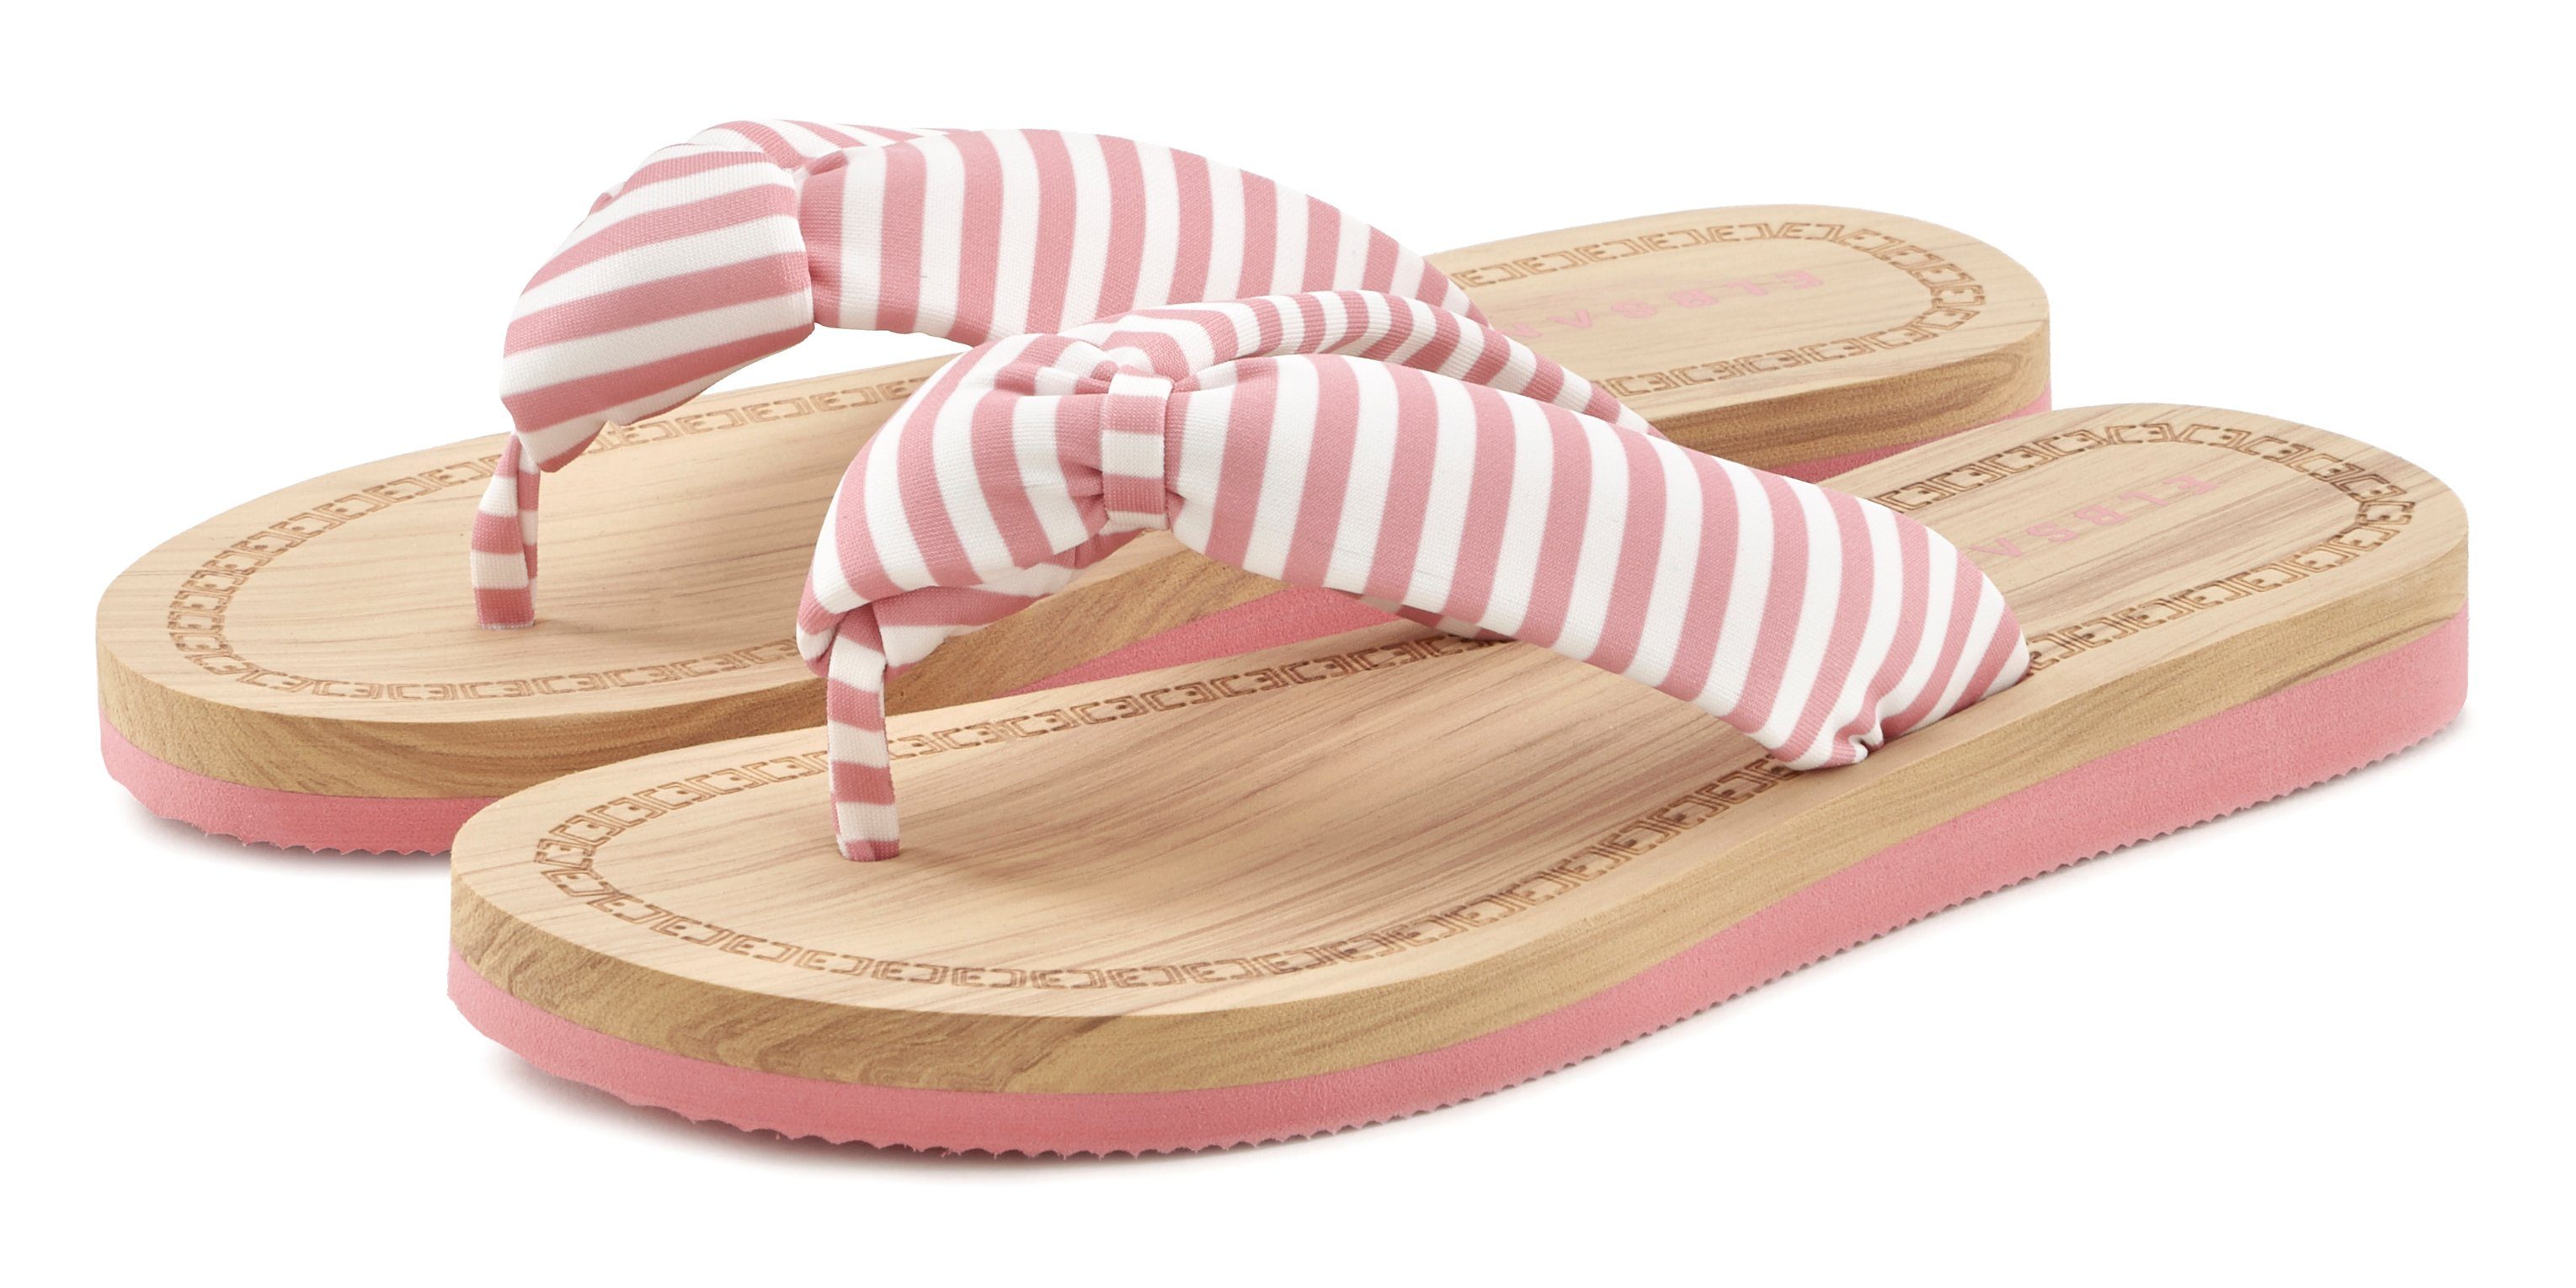 ultraleicht Badeschuh rosa-gestreift Pantolette, Sandale, Badezehentrenner VEGAN Elbsand